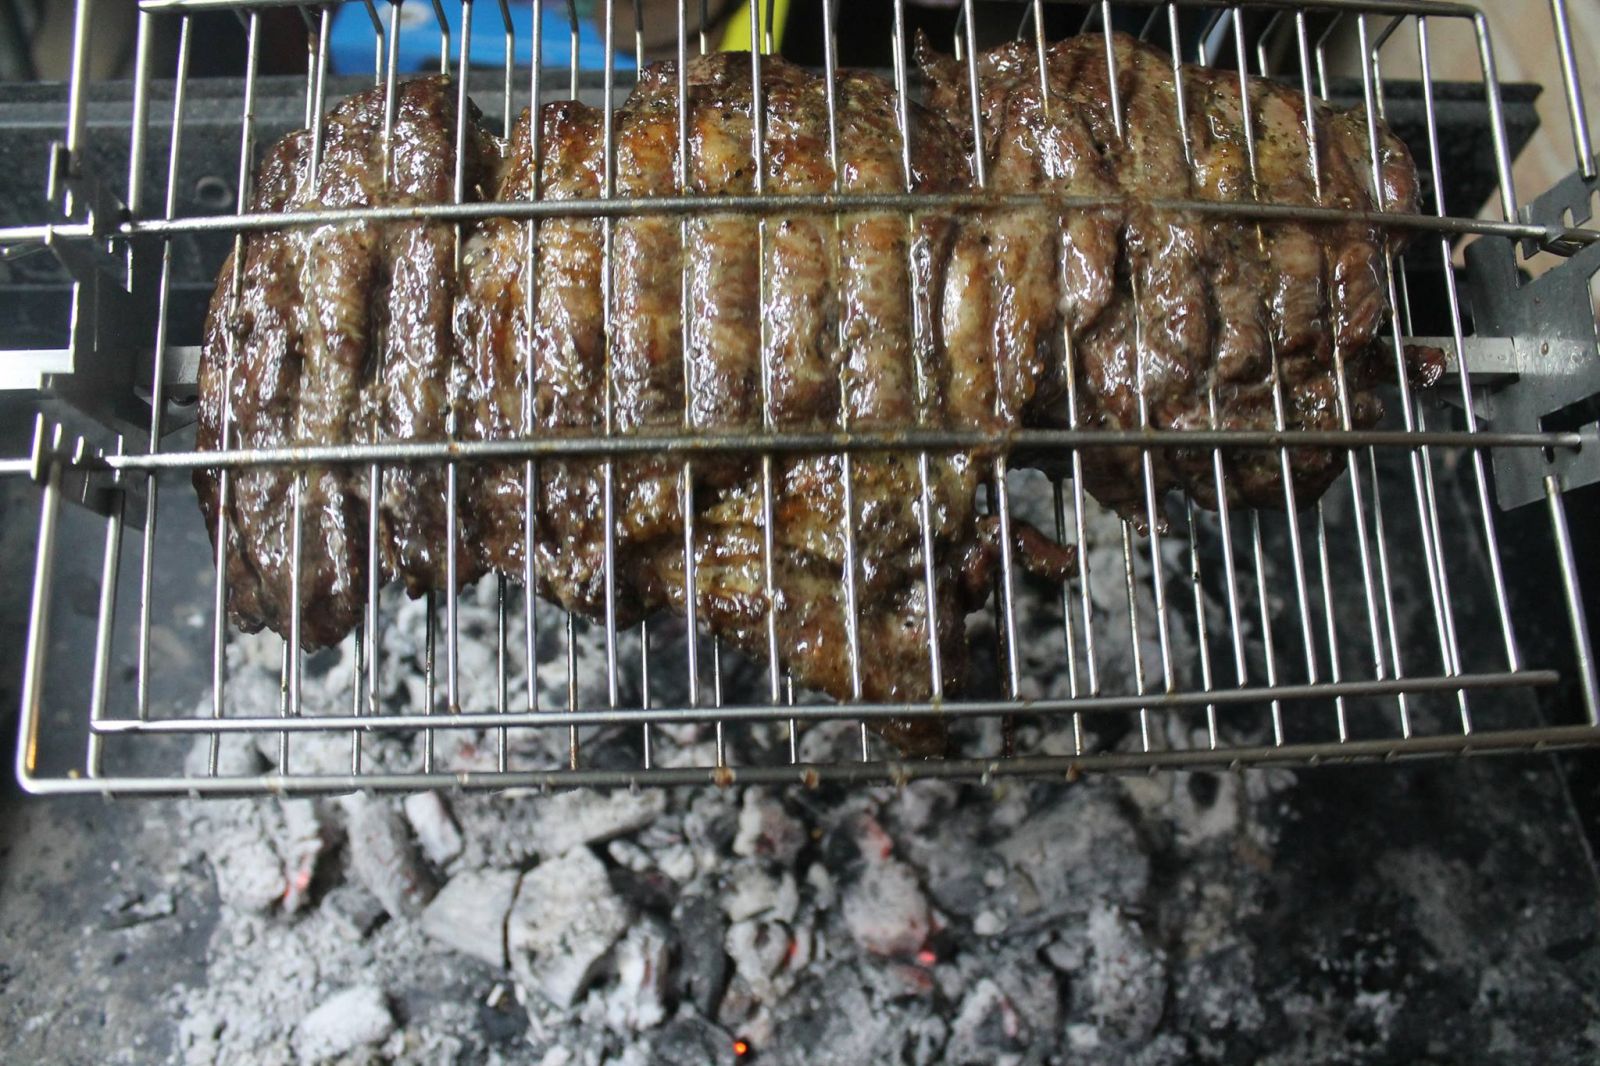 Deboned leg of lamb cooking on a Cyprus Spit Roaster